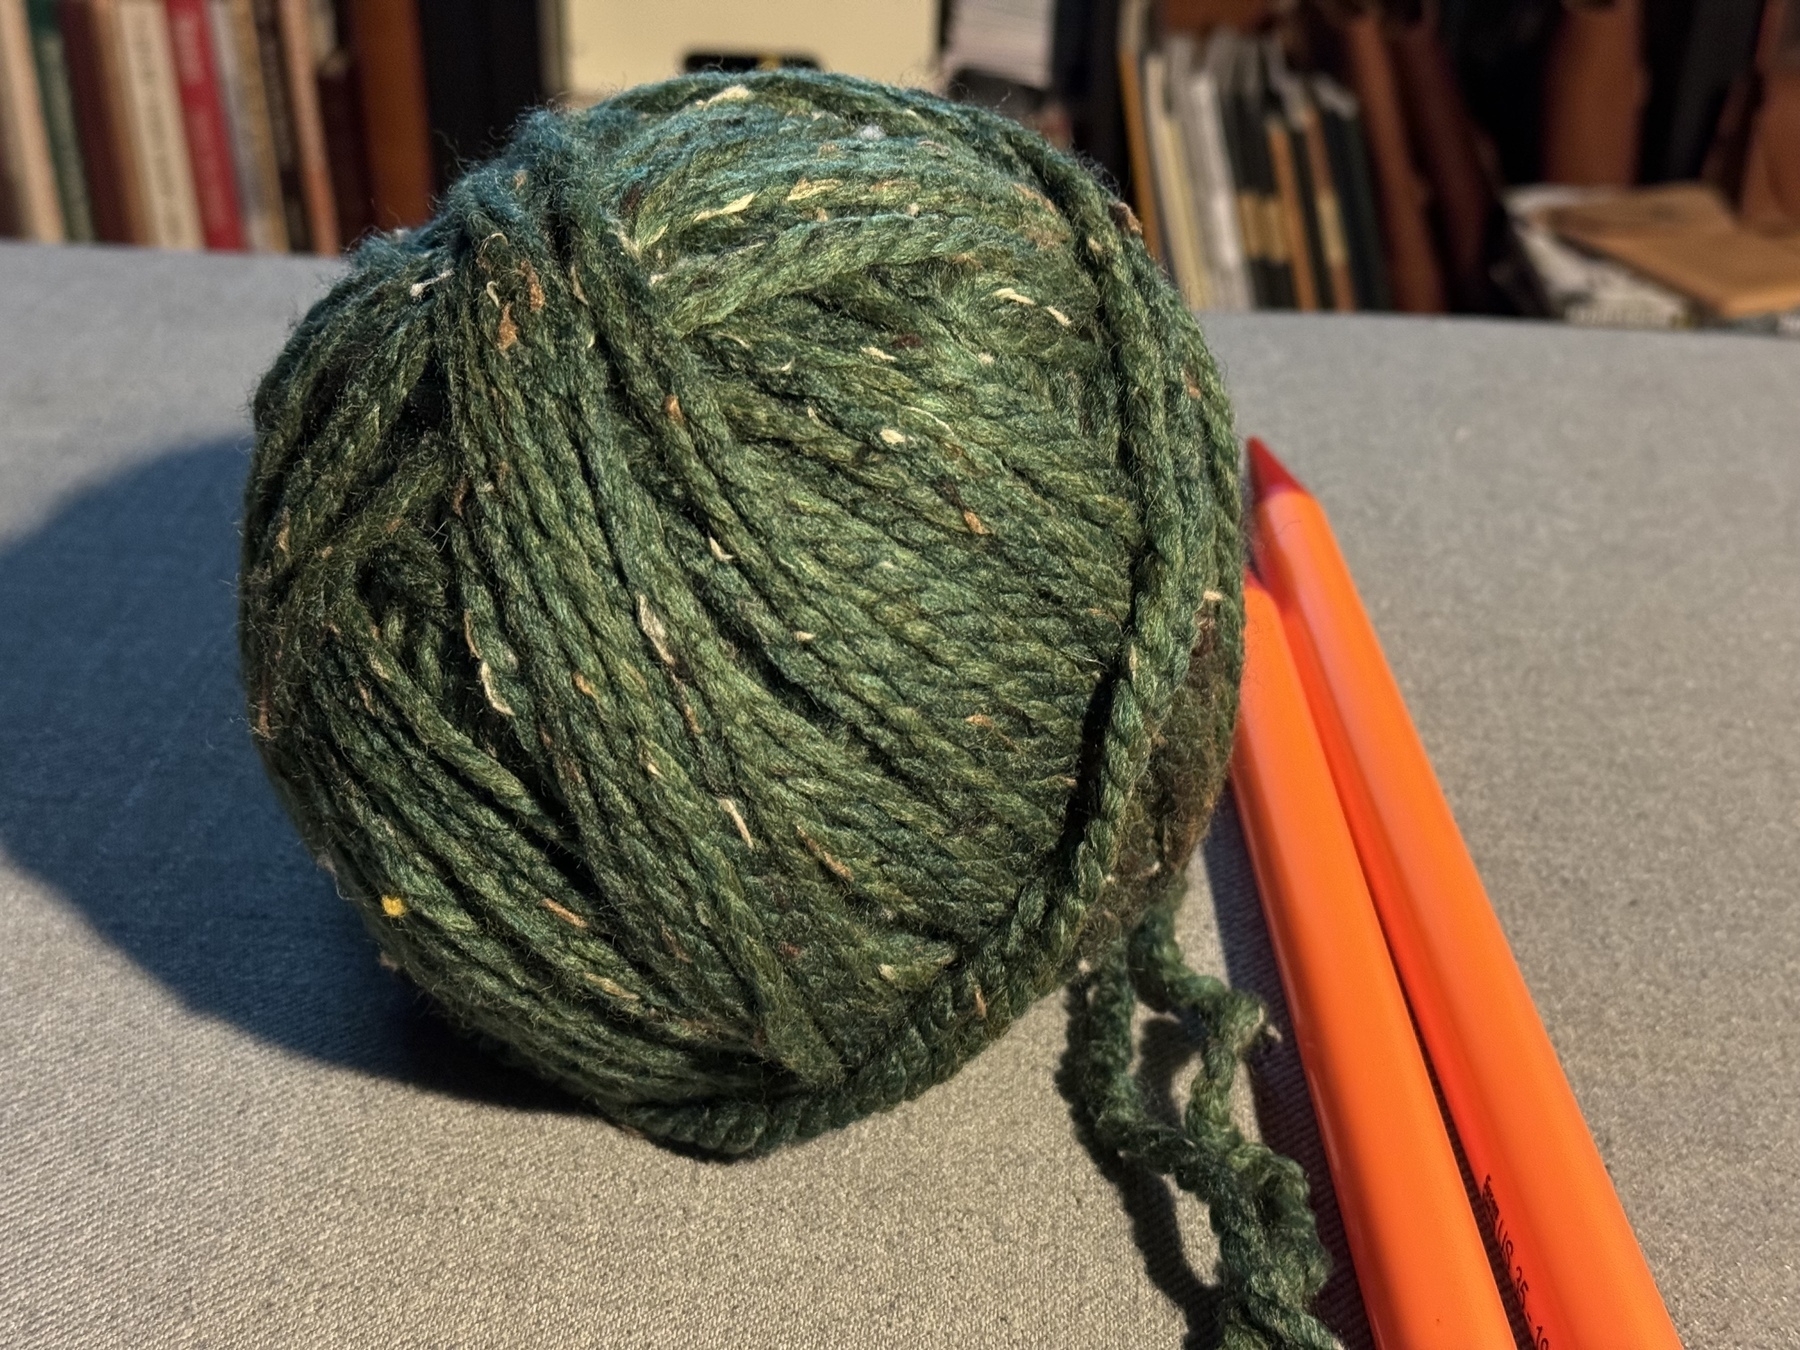 “Kale” colored yarn next to orange knitting needles